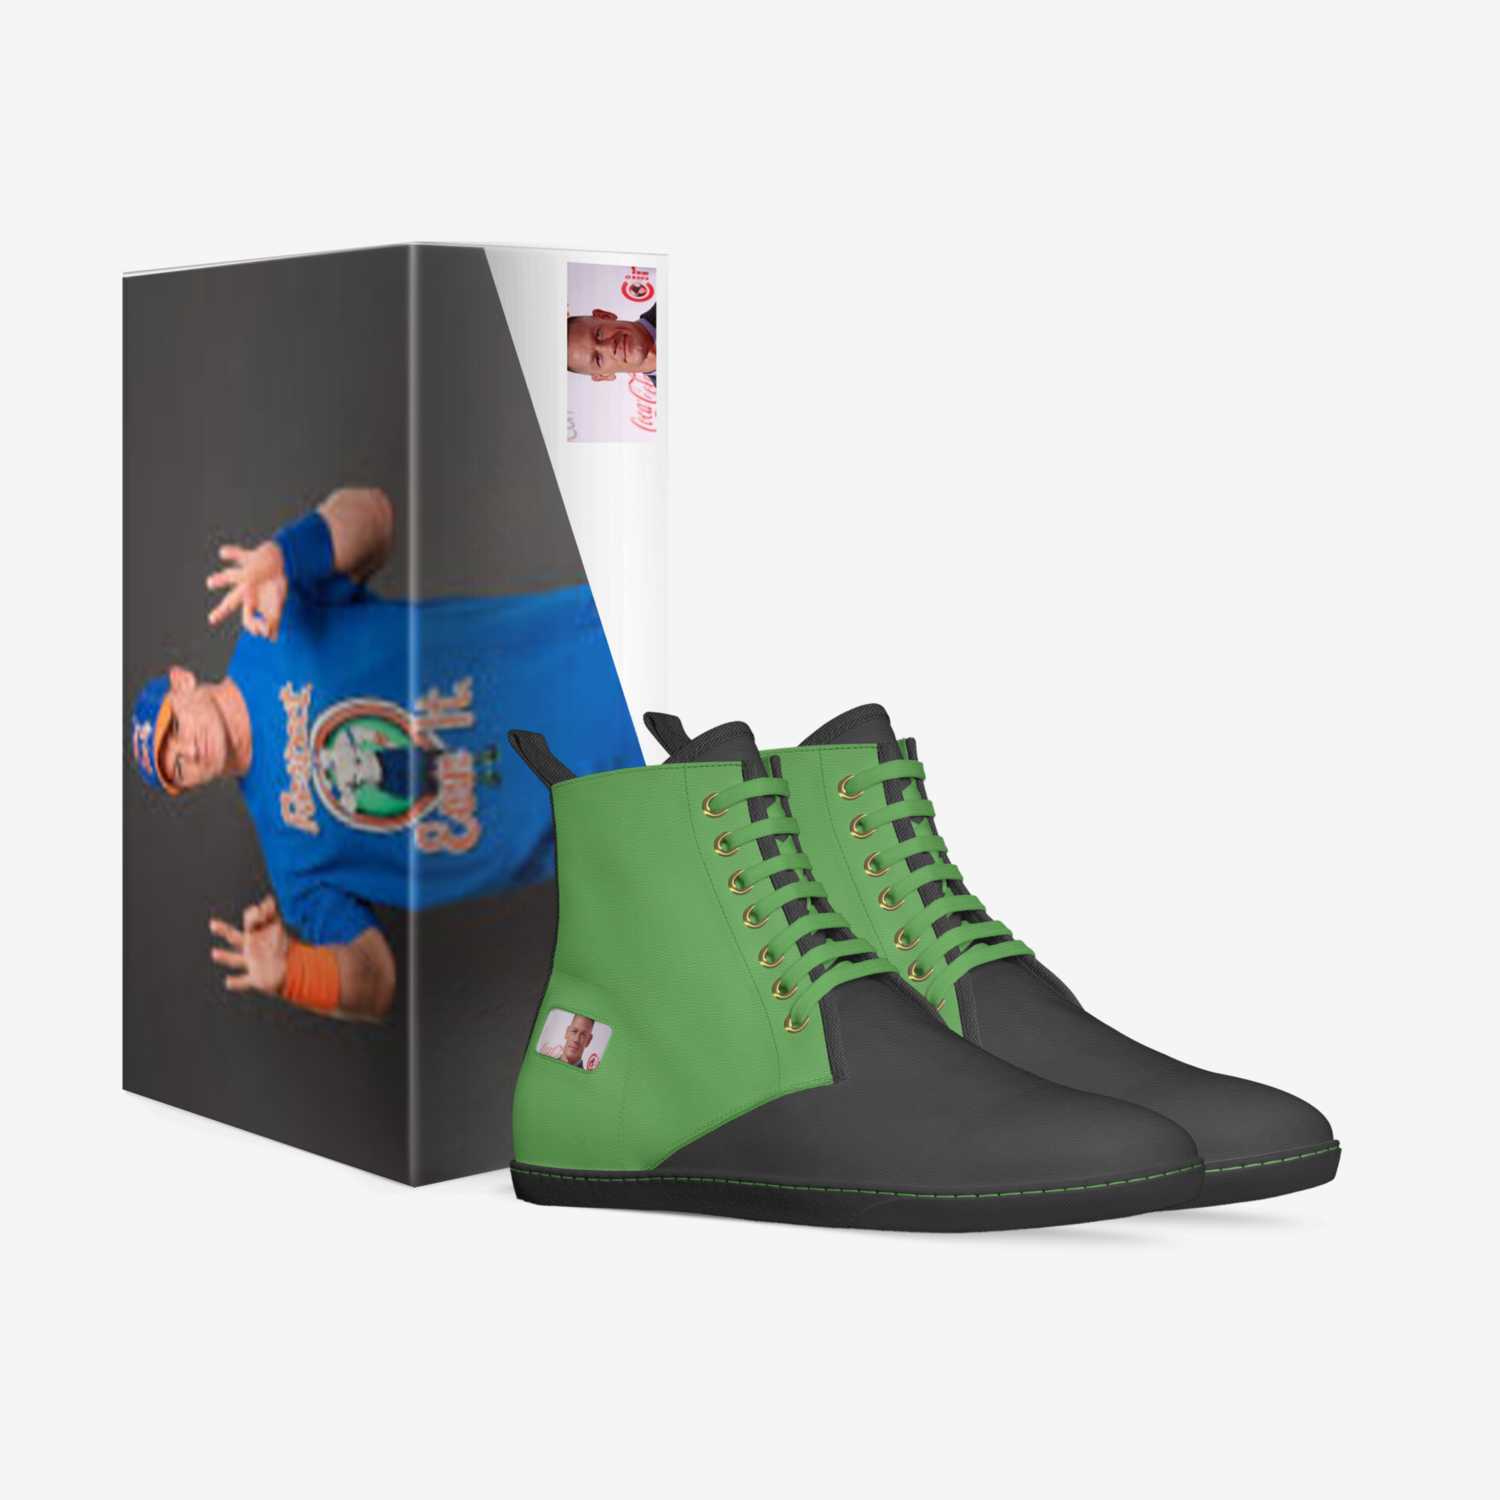 John Cenas custom made in Italy shoes by Alex Perez | Box view